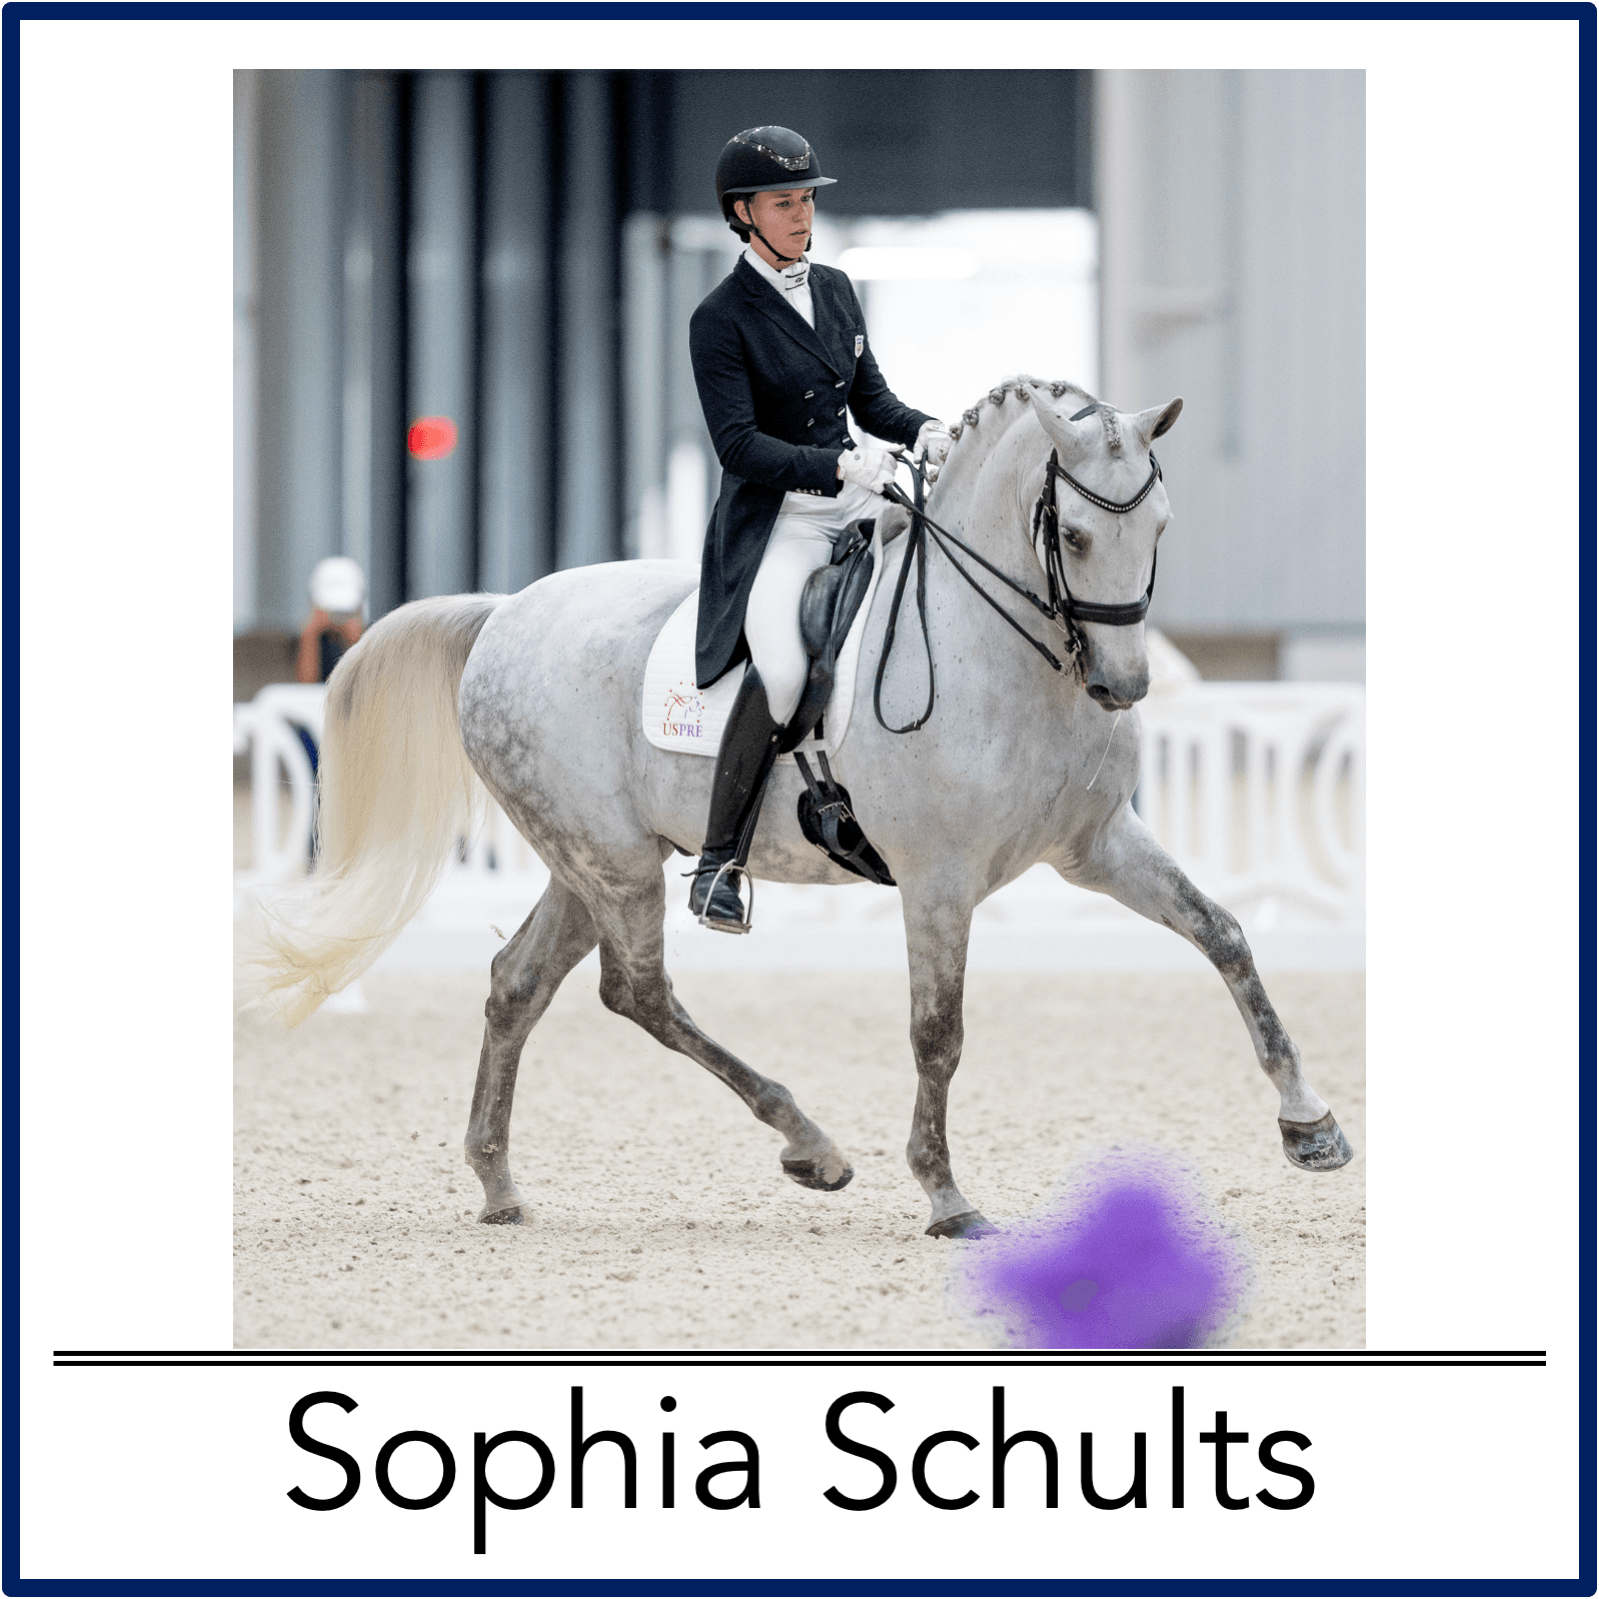 Sophia Schults